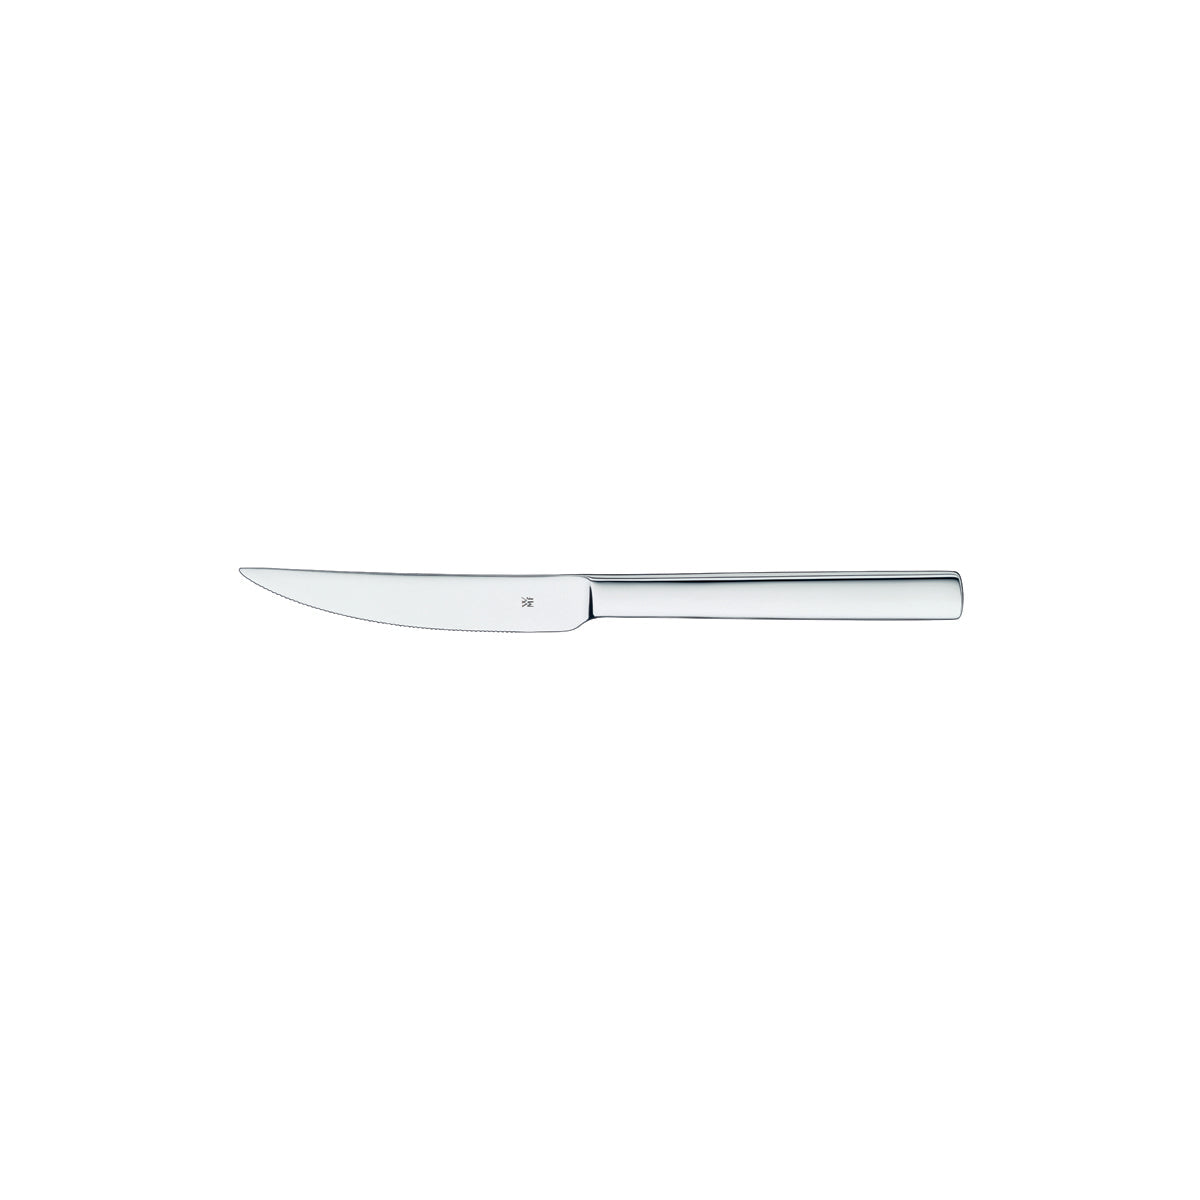 12.5378.6049 WMF Unic Steak Knife Stainless Steel Tomkin Australia Hospitality Supplies